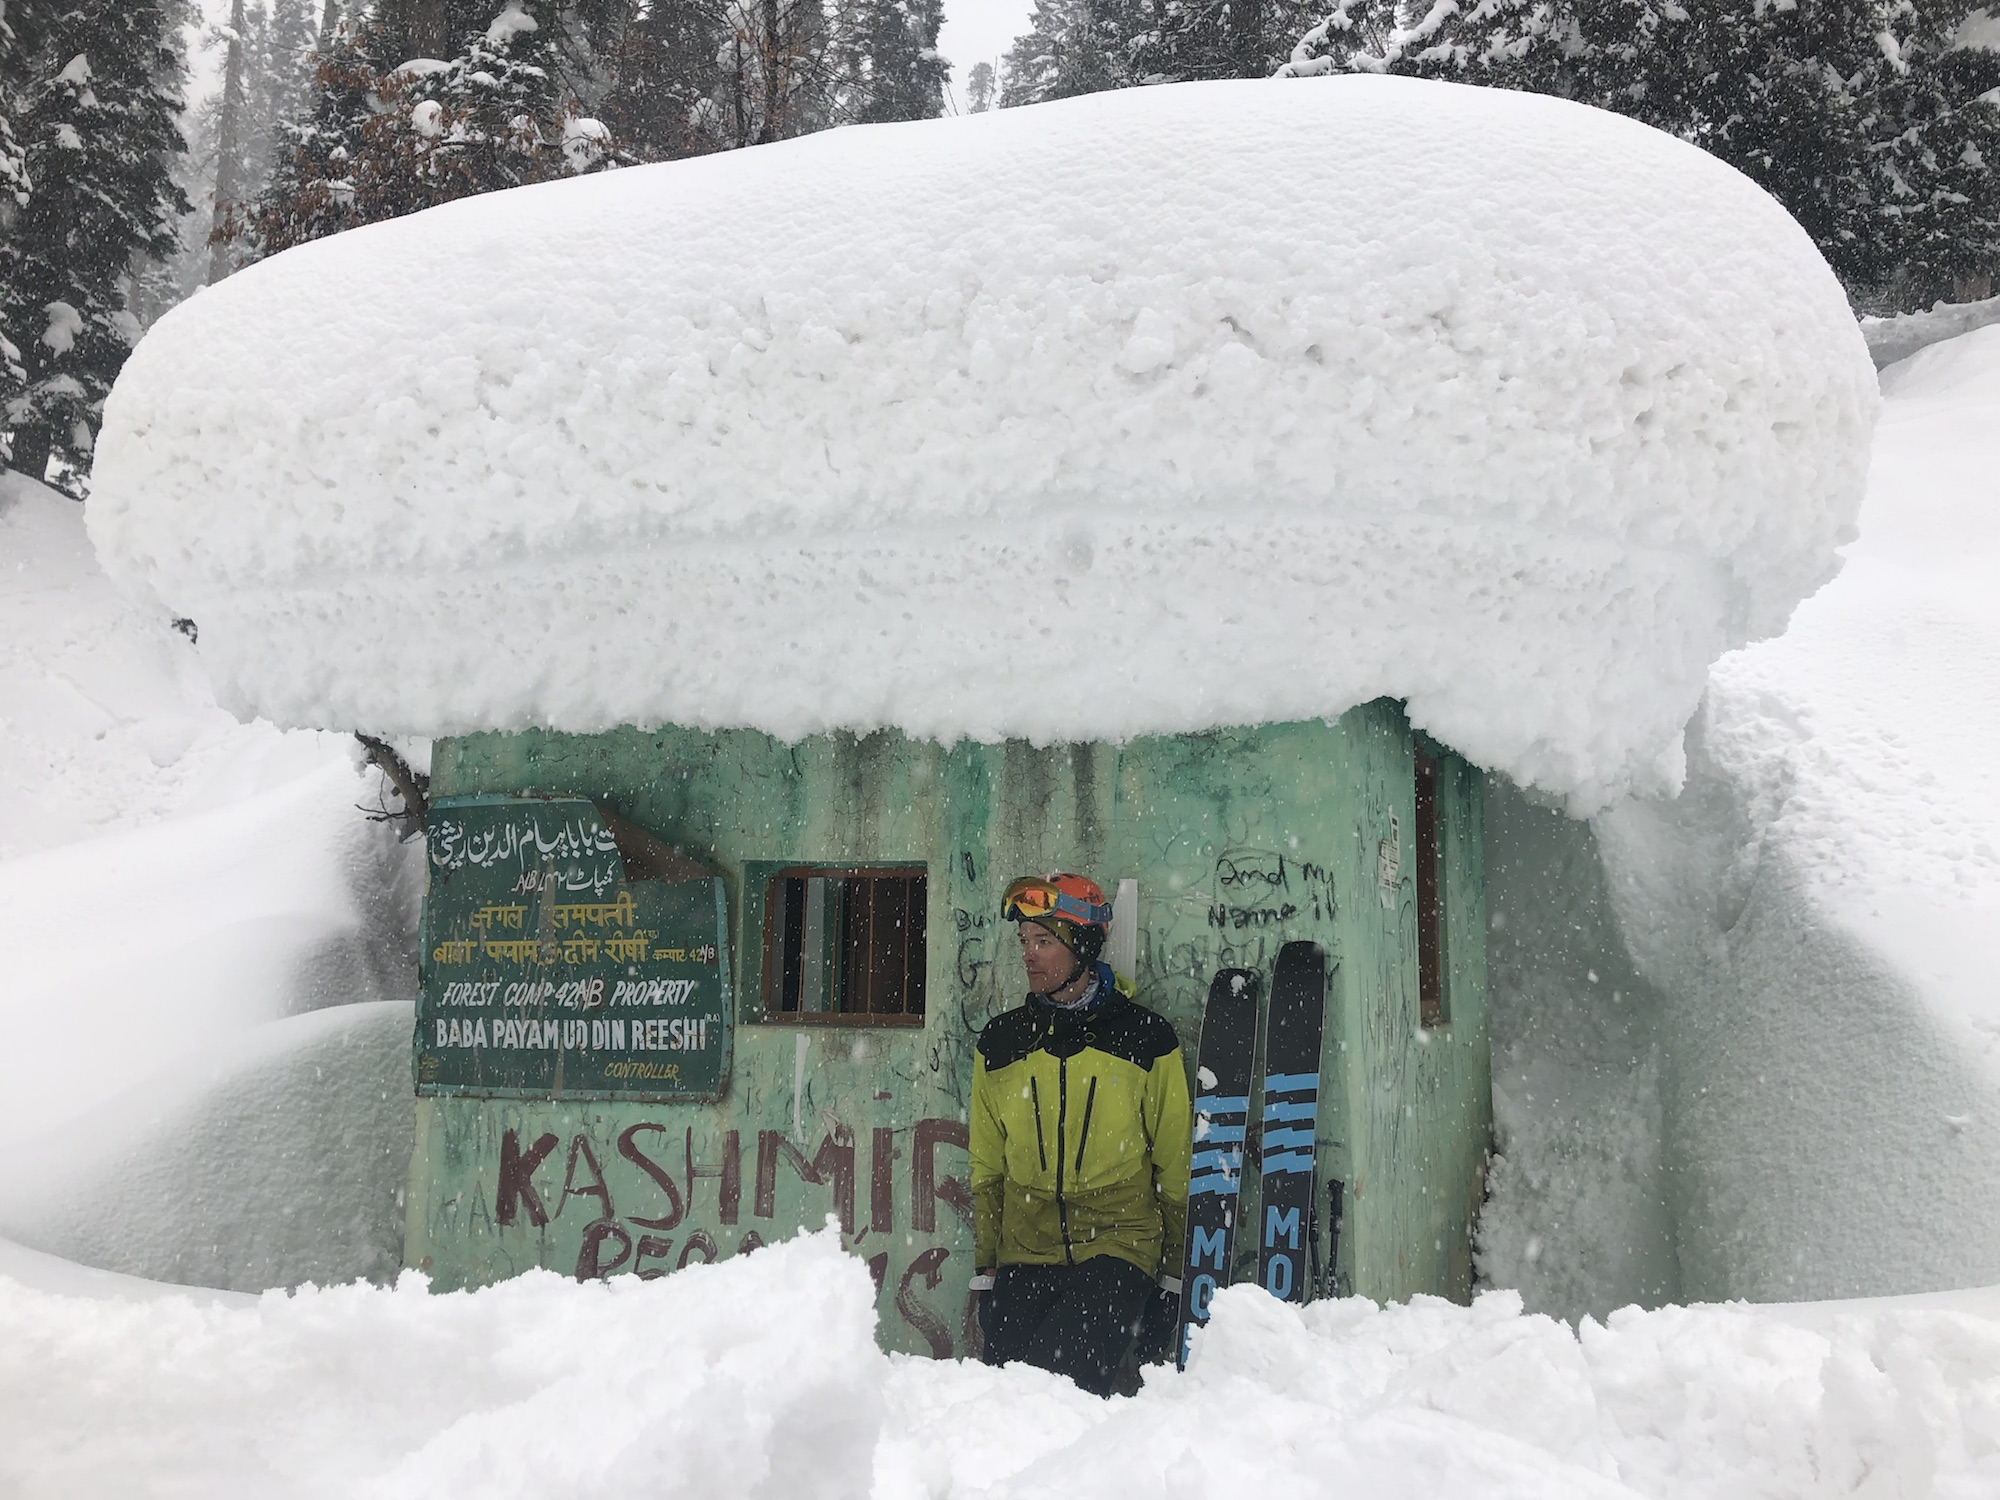 Luke Smithwick skiing the Kashmir Himalayas in February 2019.